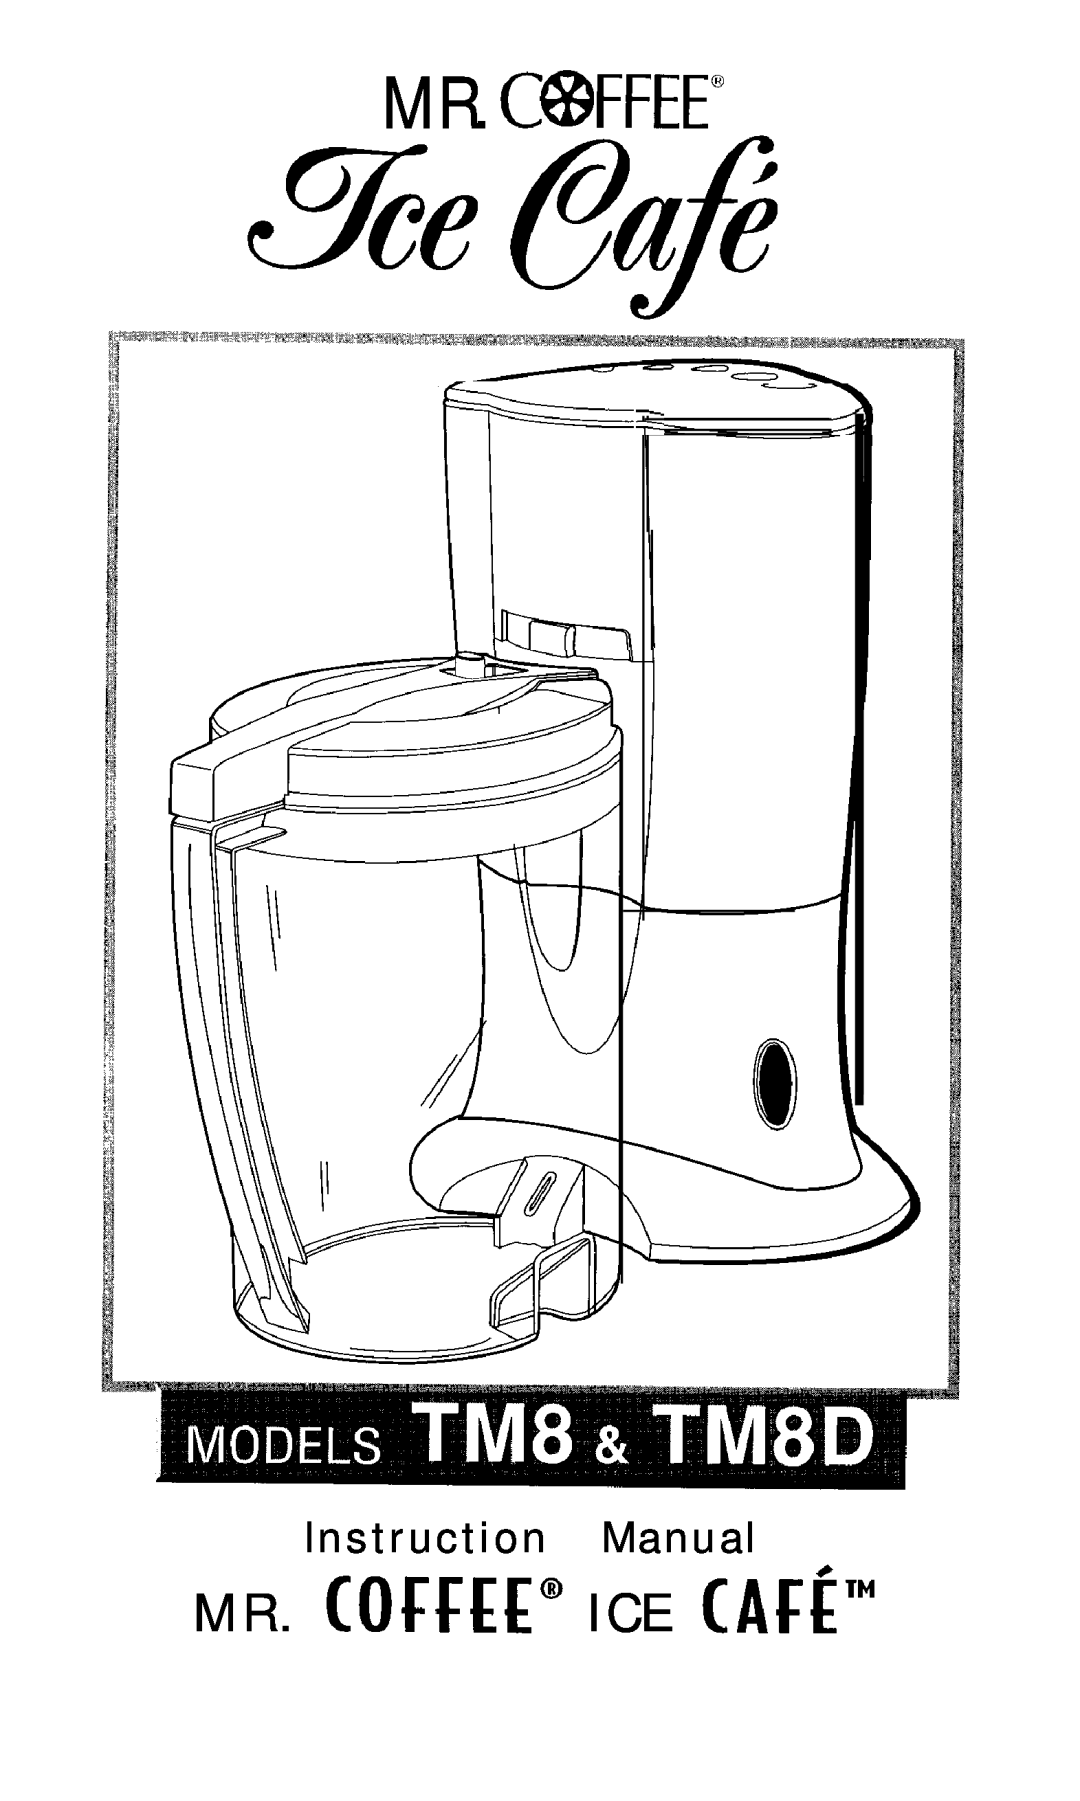 Mr. Coffee TM8D instruction manual I-It, M R . COFCEE” I C E Aft’”, Mr. C@Ffee@, Instruction Manual 